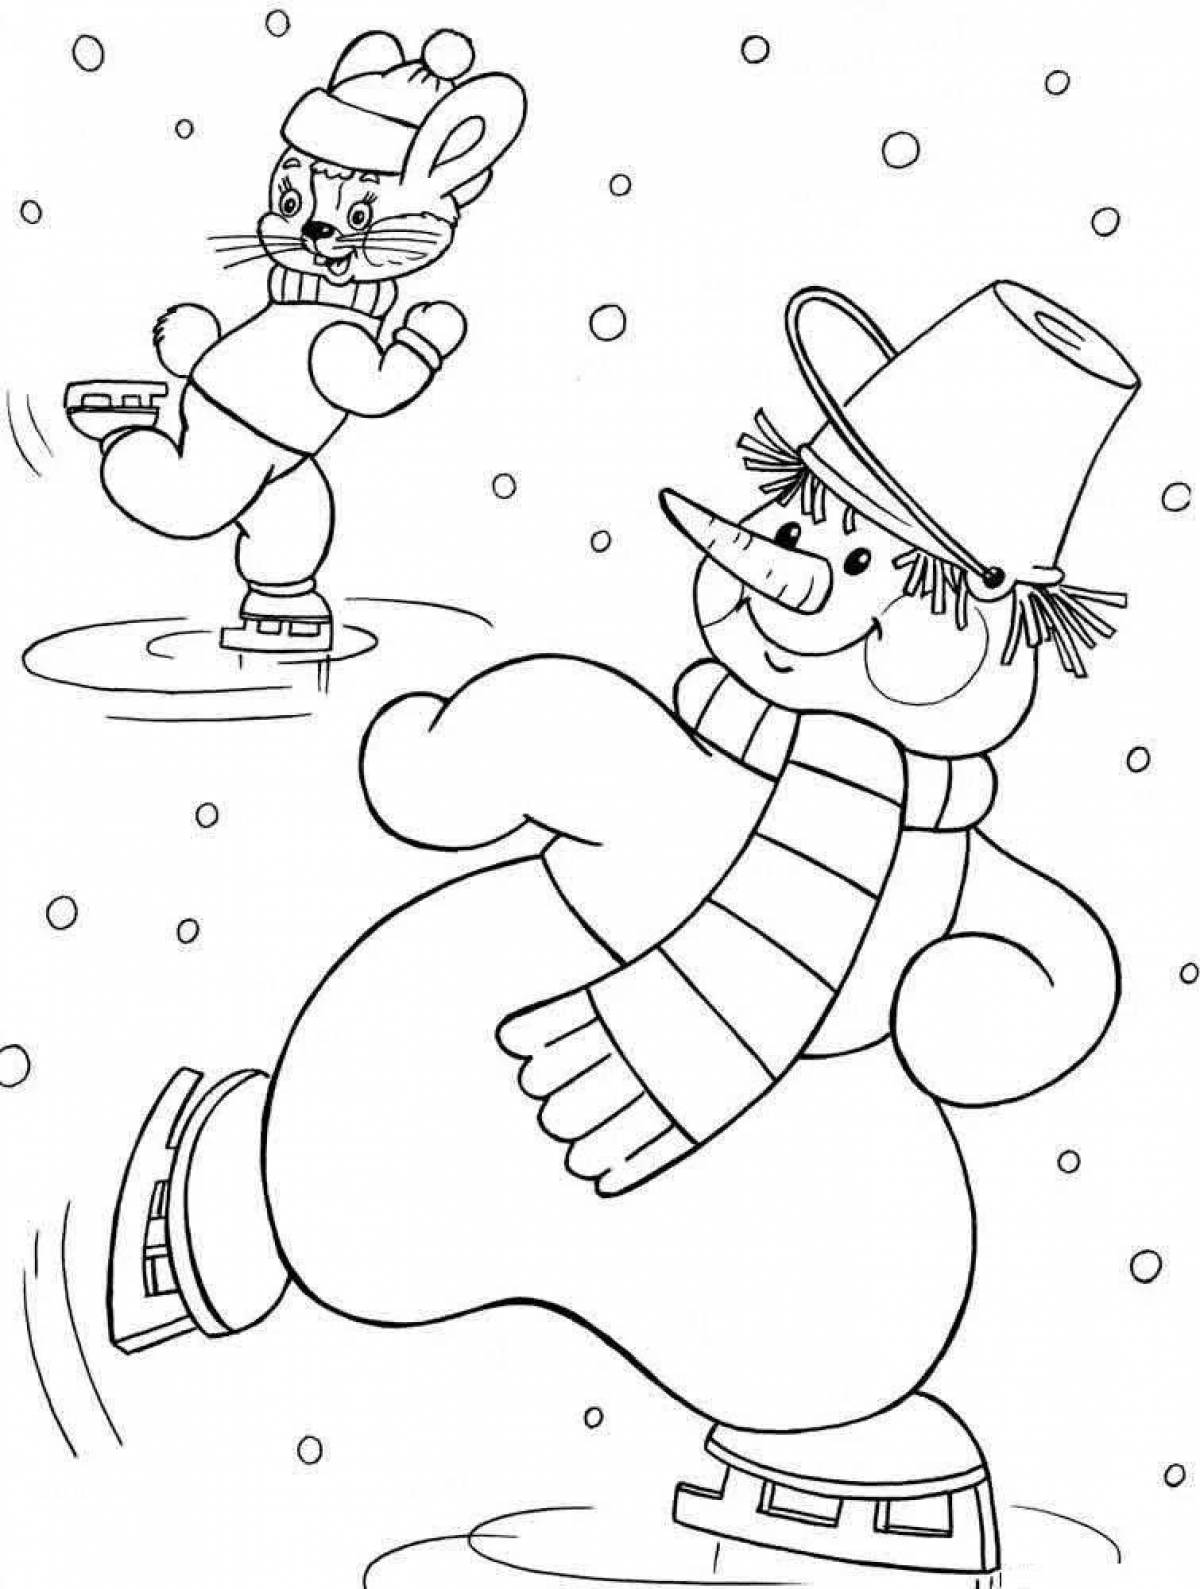 Snowman on skis #3